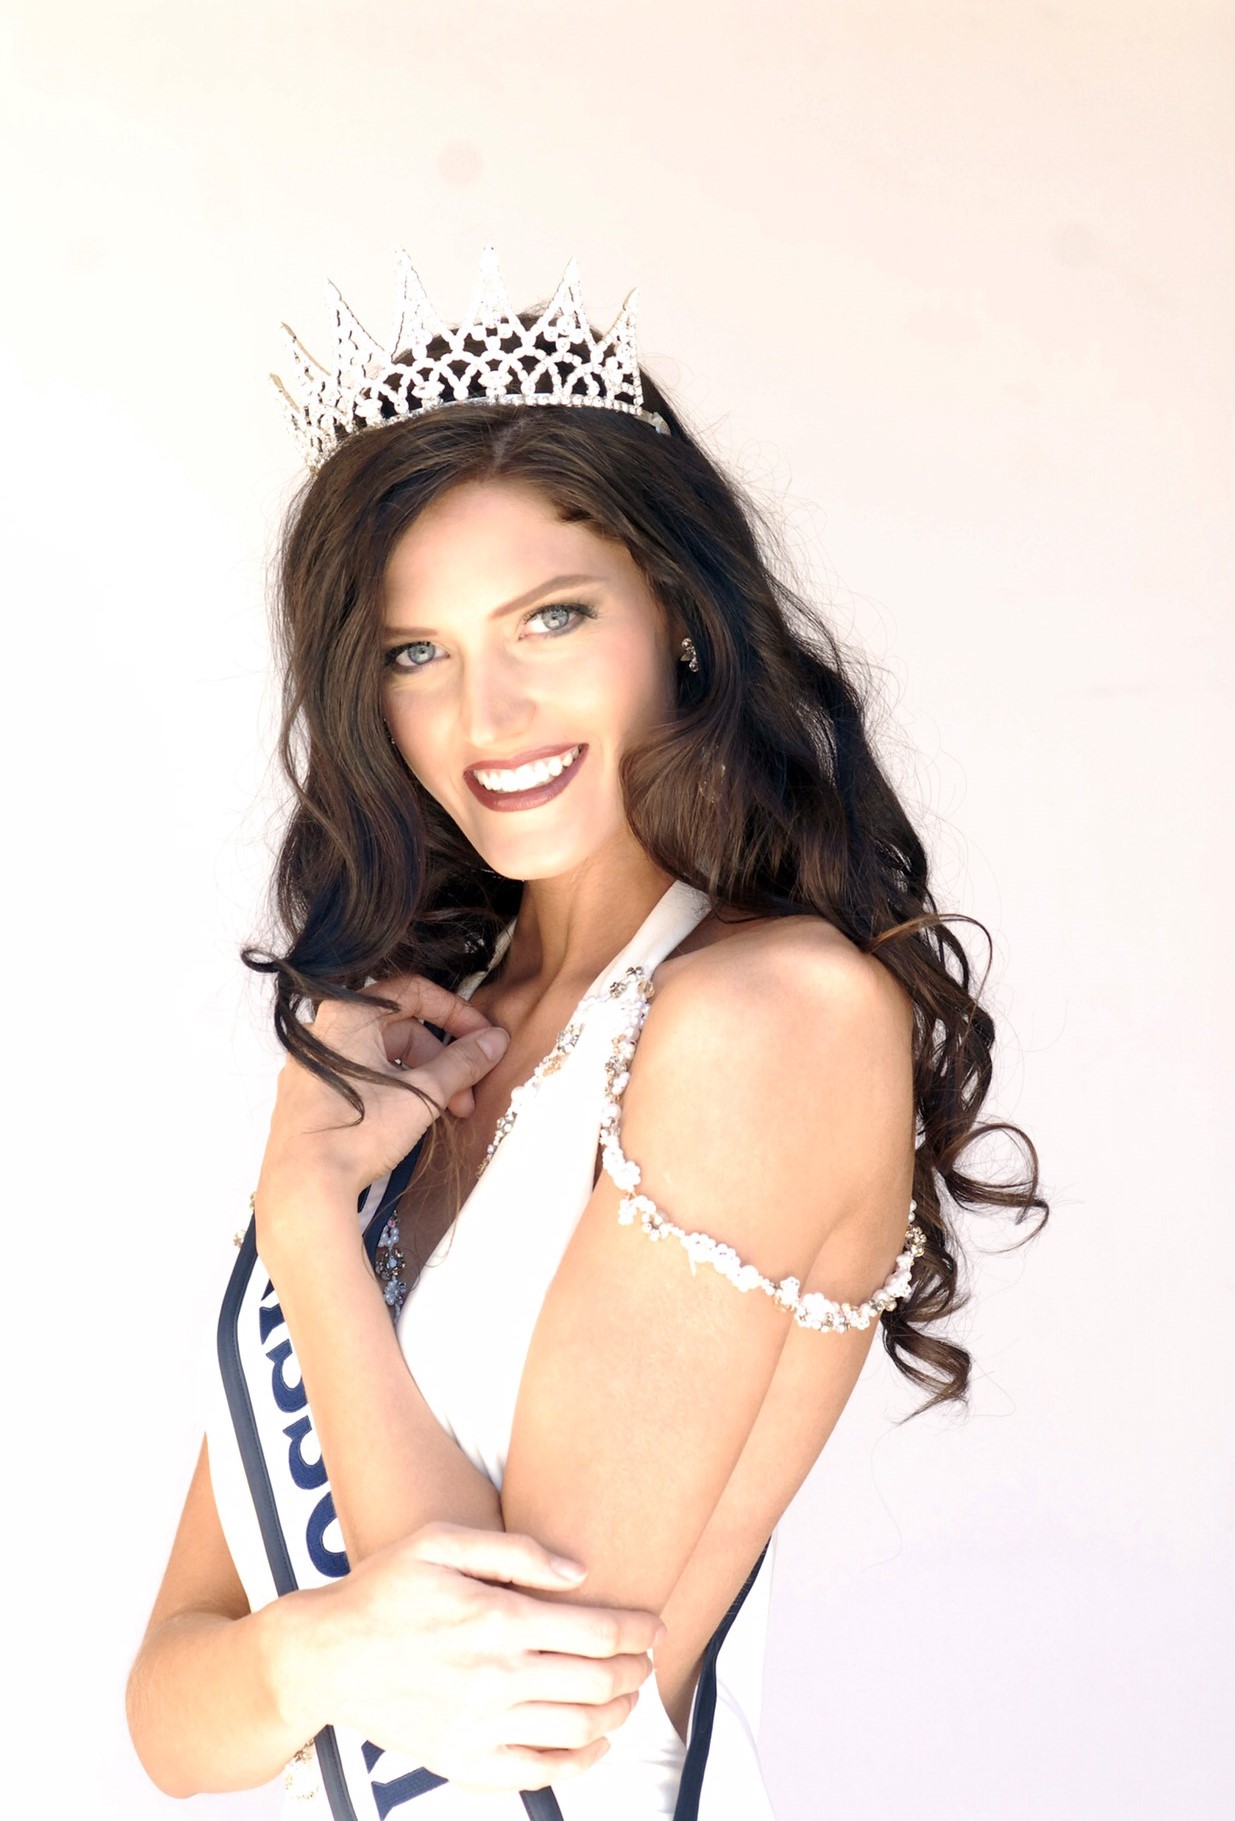 Erica Stone as Miss Missouri 2015